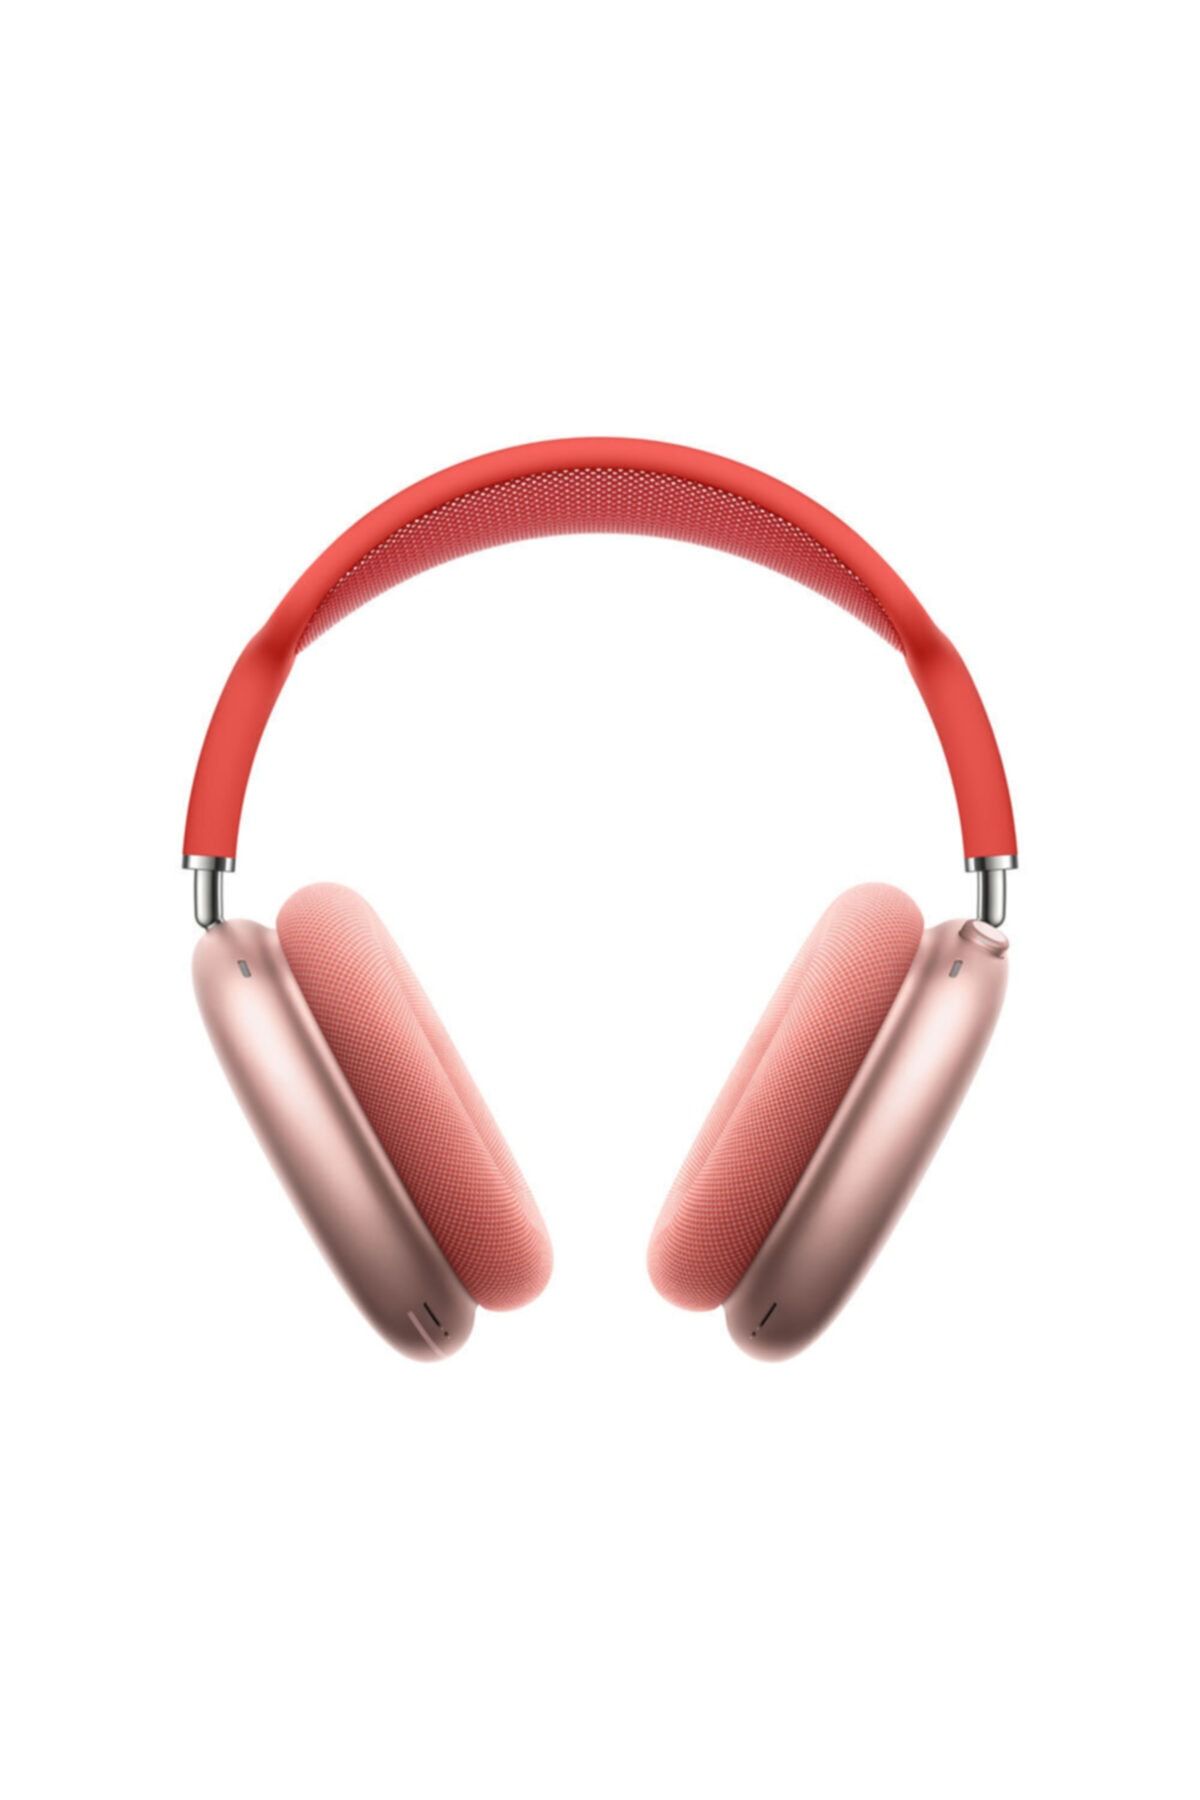 Apple Airpods Max Bluetooth Kulaküstü Kulaklık - Pembe - Mgym3tu/a